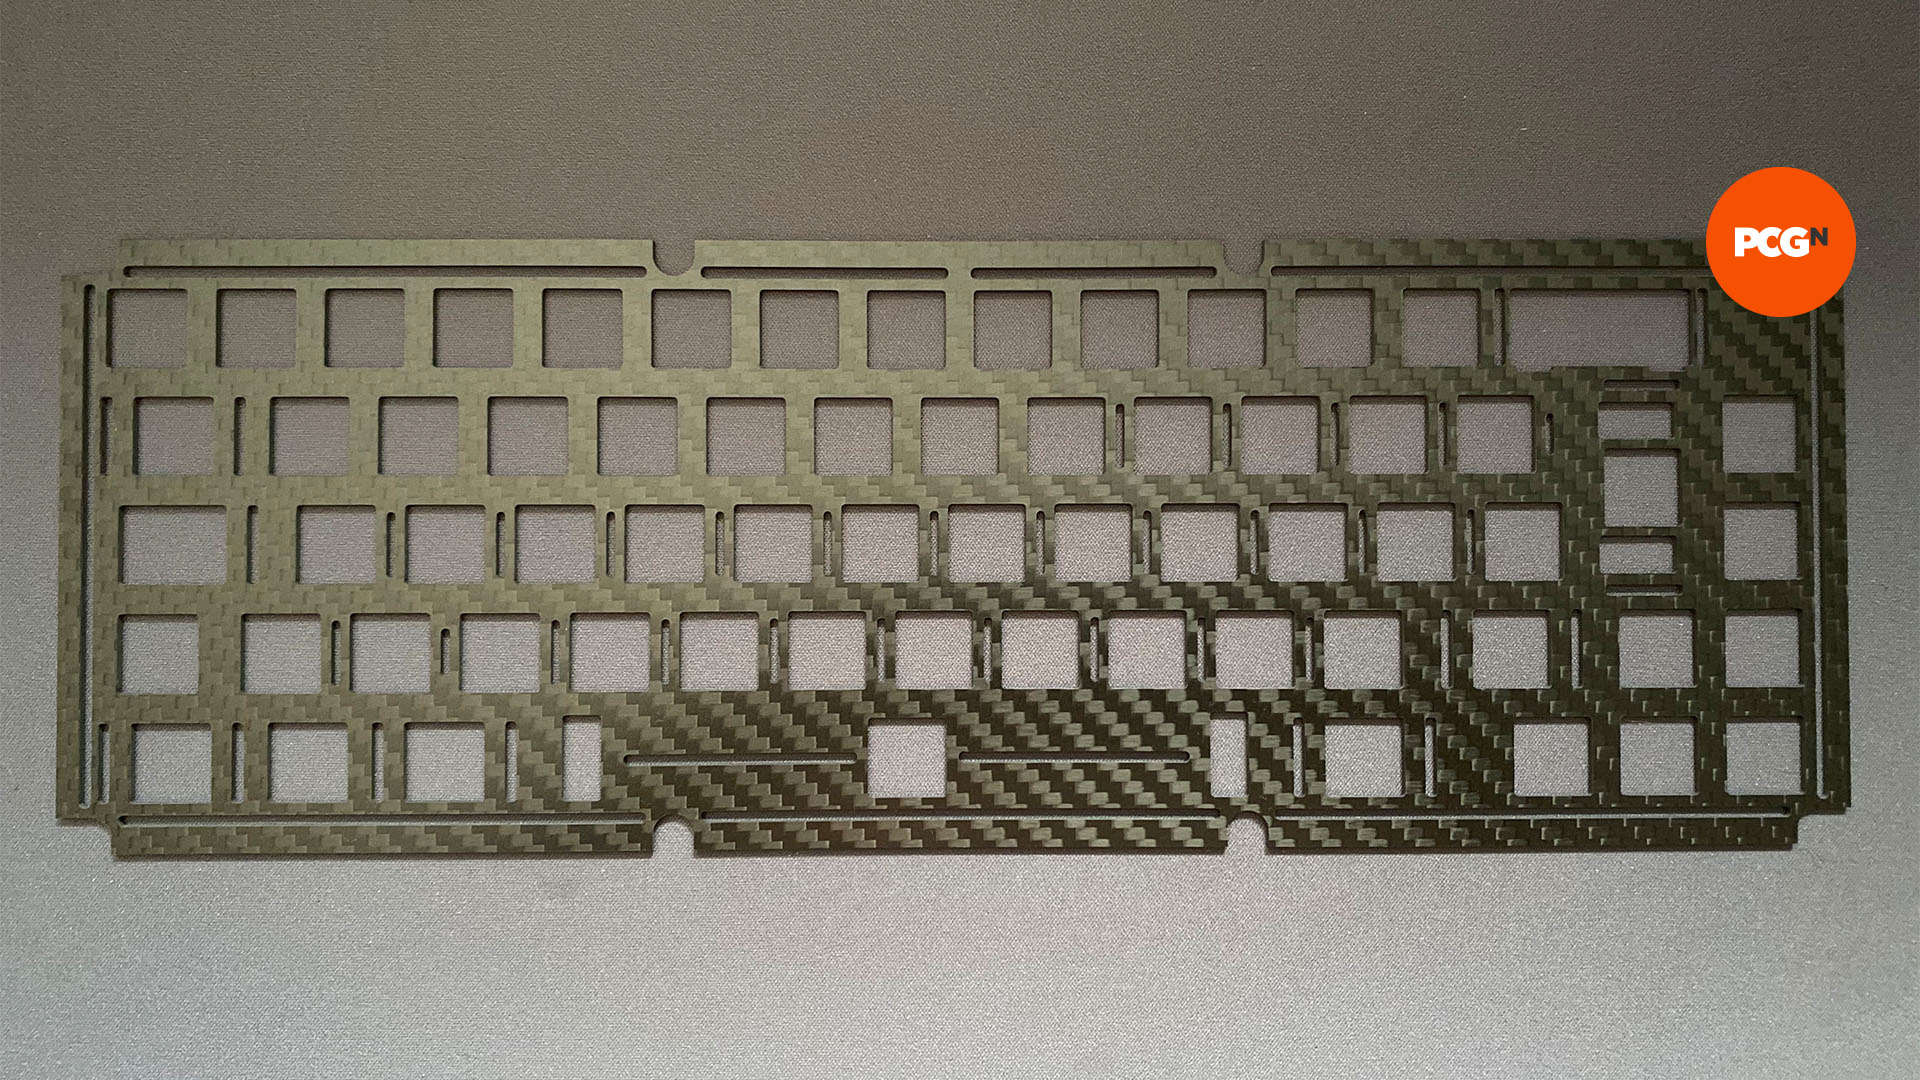 How to make a custom keyboard: Carbon fiber plate